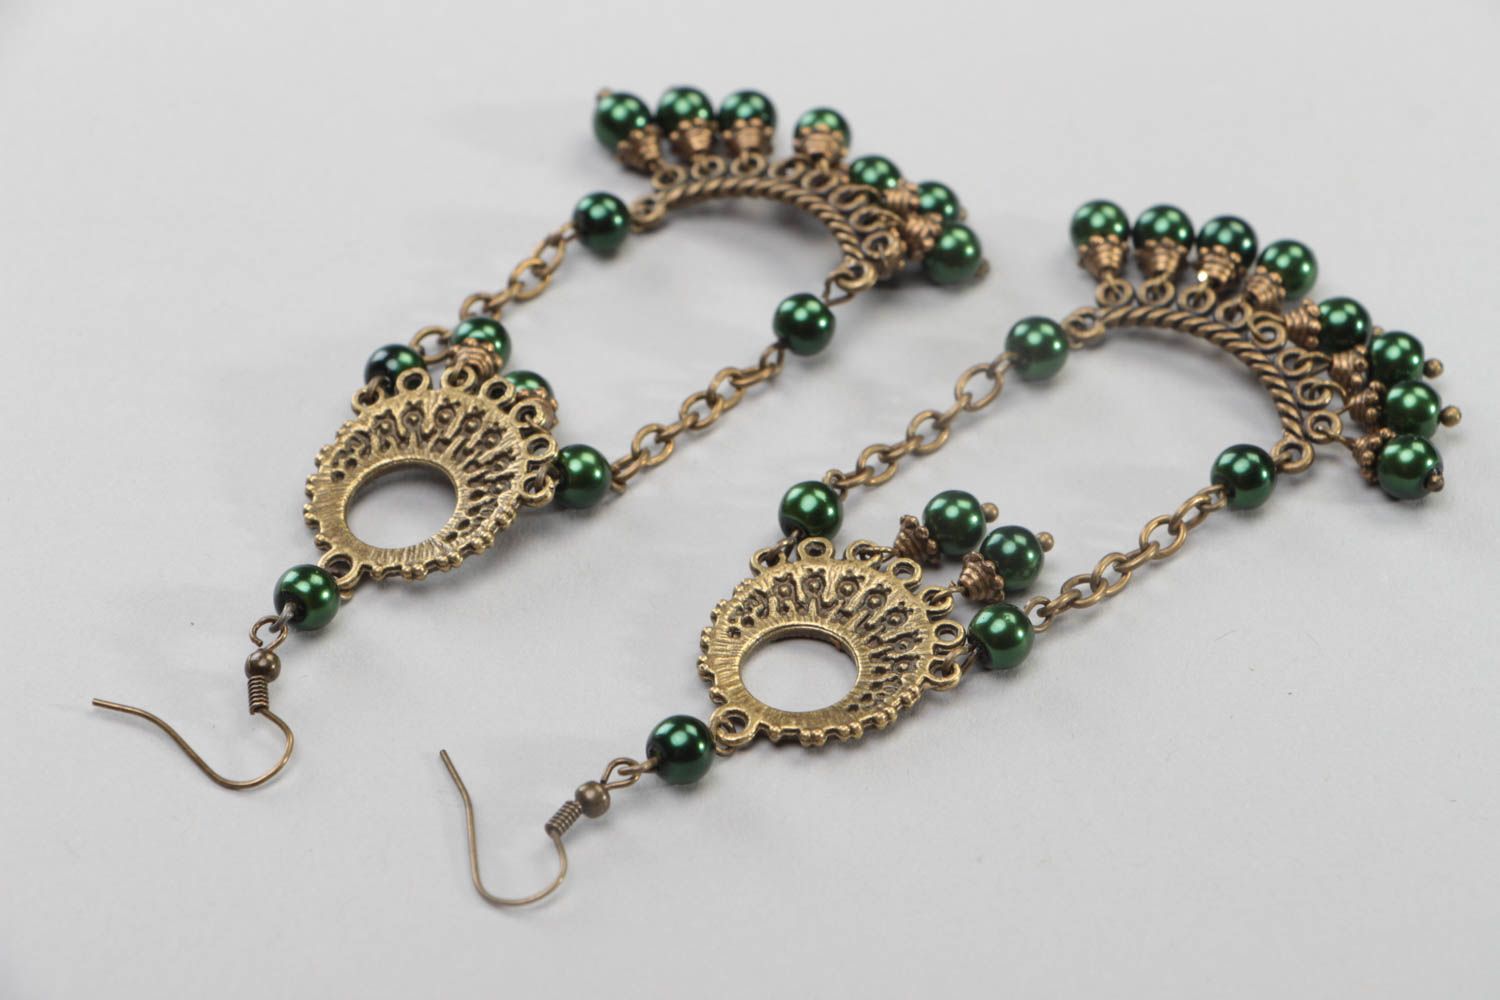 Handmade earrings with charms unusual stylish accessories beautiful jewelry photo 4